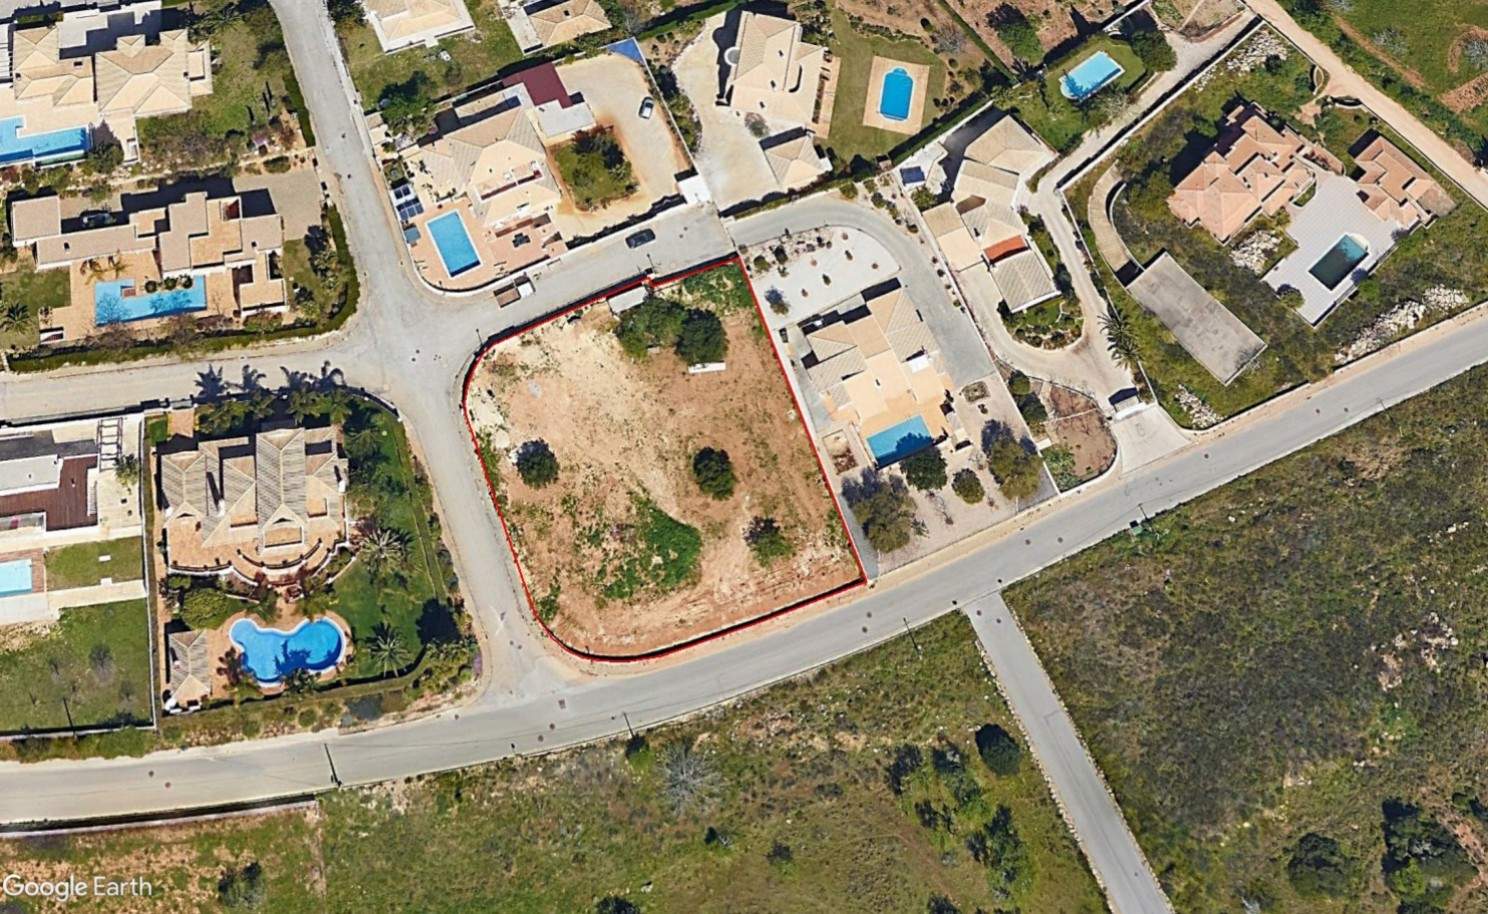 Terrain à bâtir, à vendre à Lagos, Algarve_212529